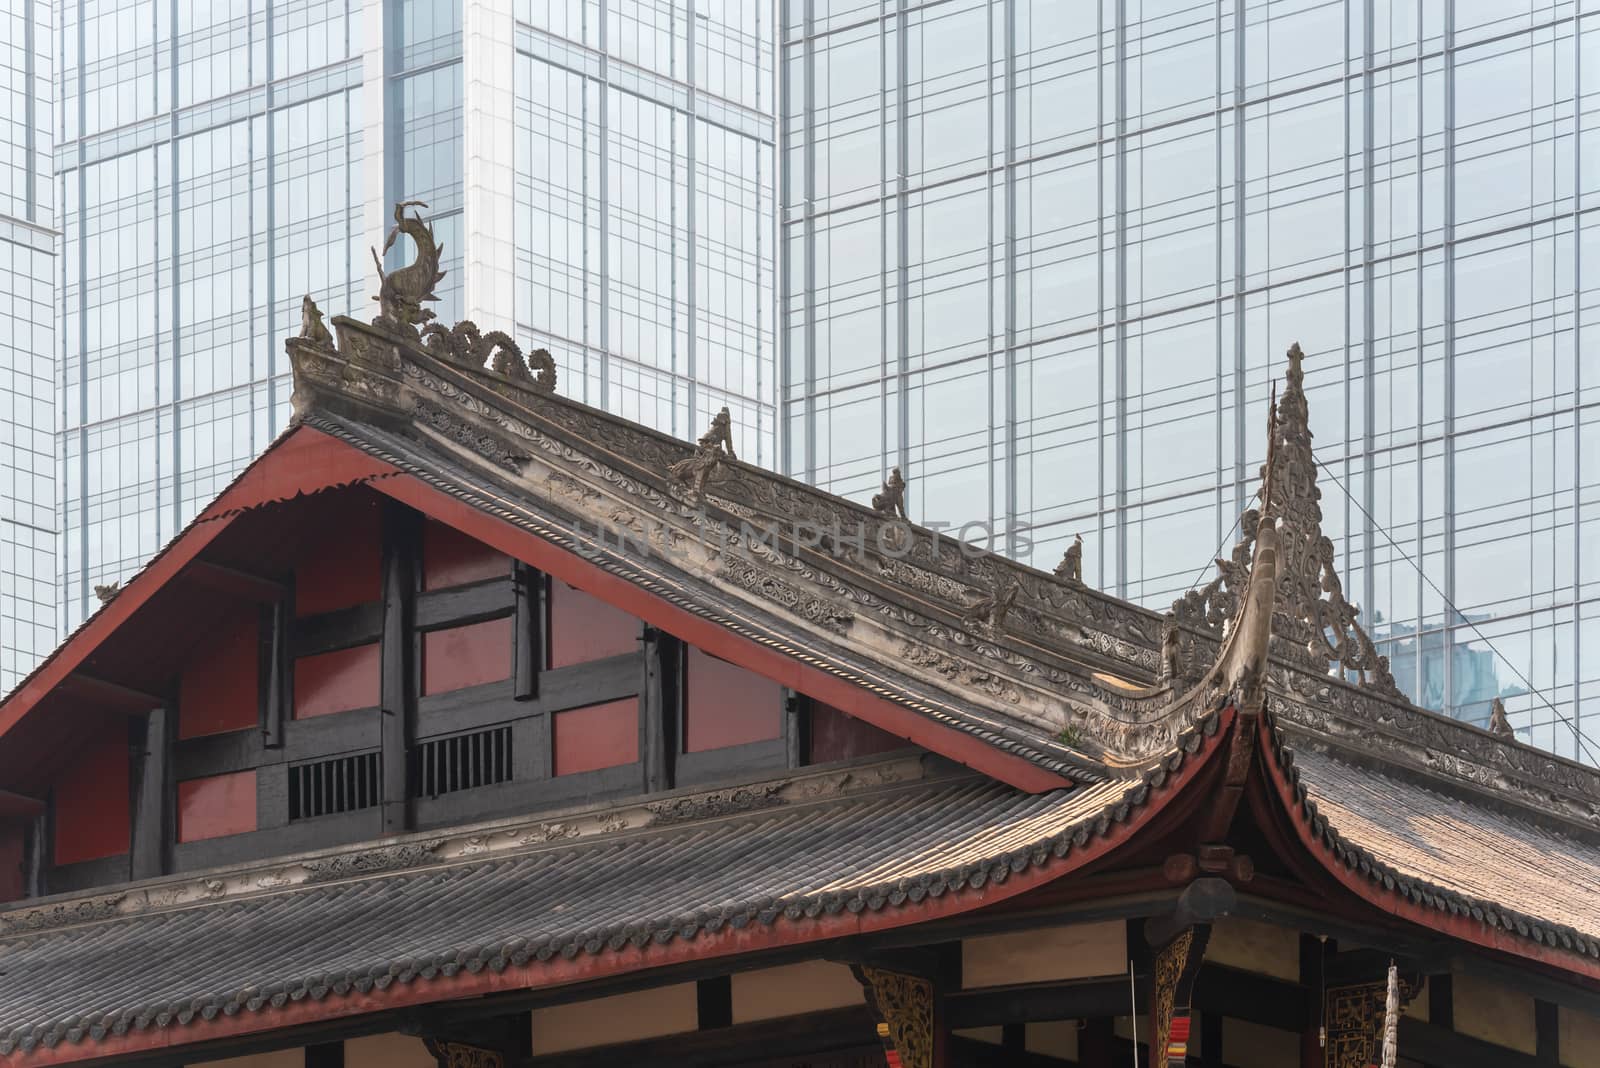 Daci buddhist temple against modern building in Chengdu, China